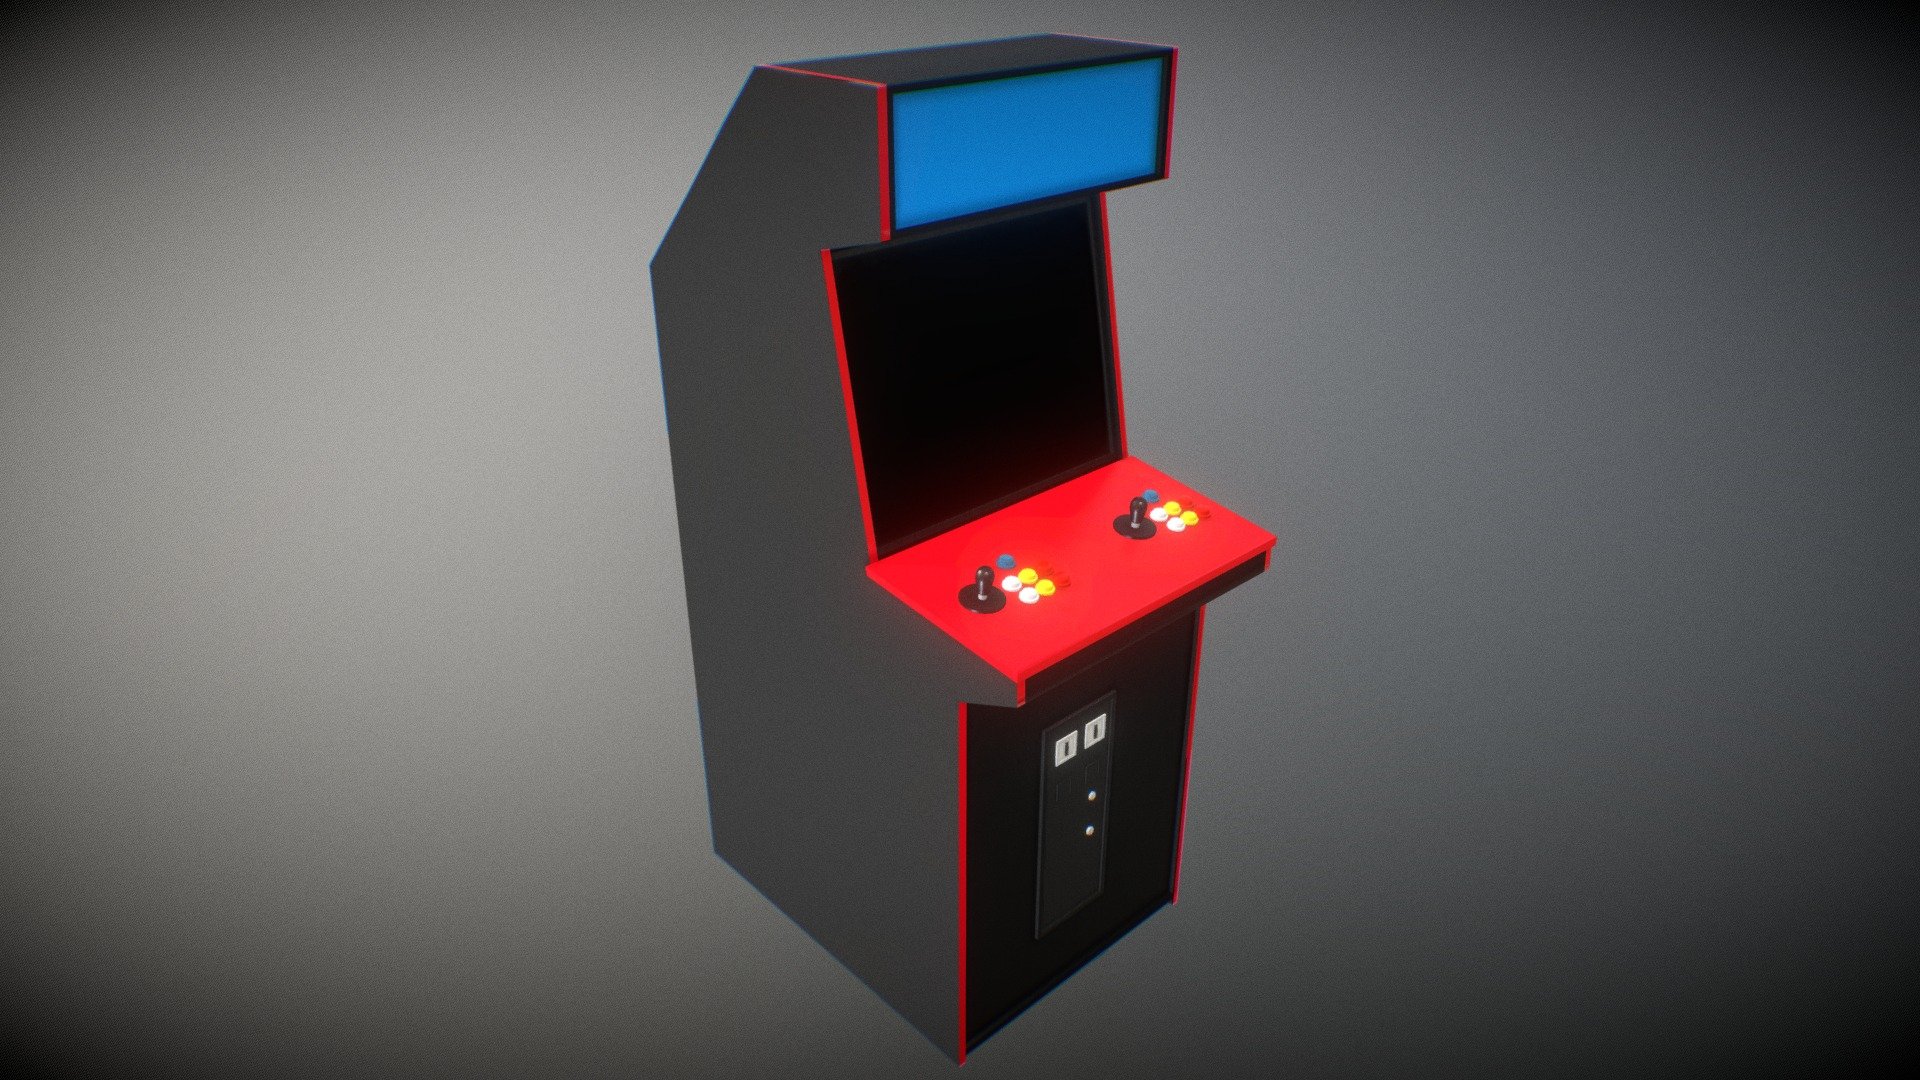 Arcade Cabinet